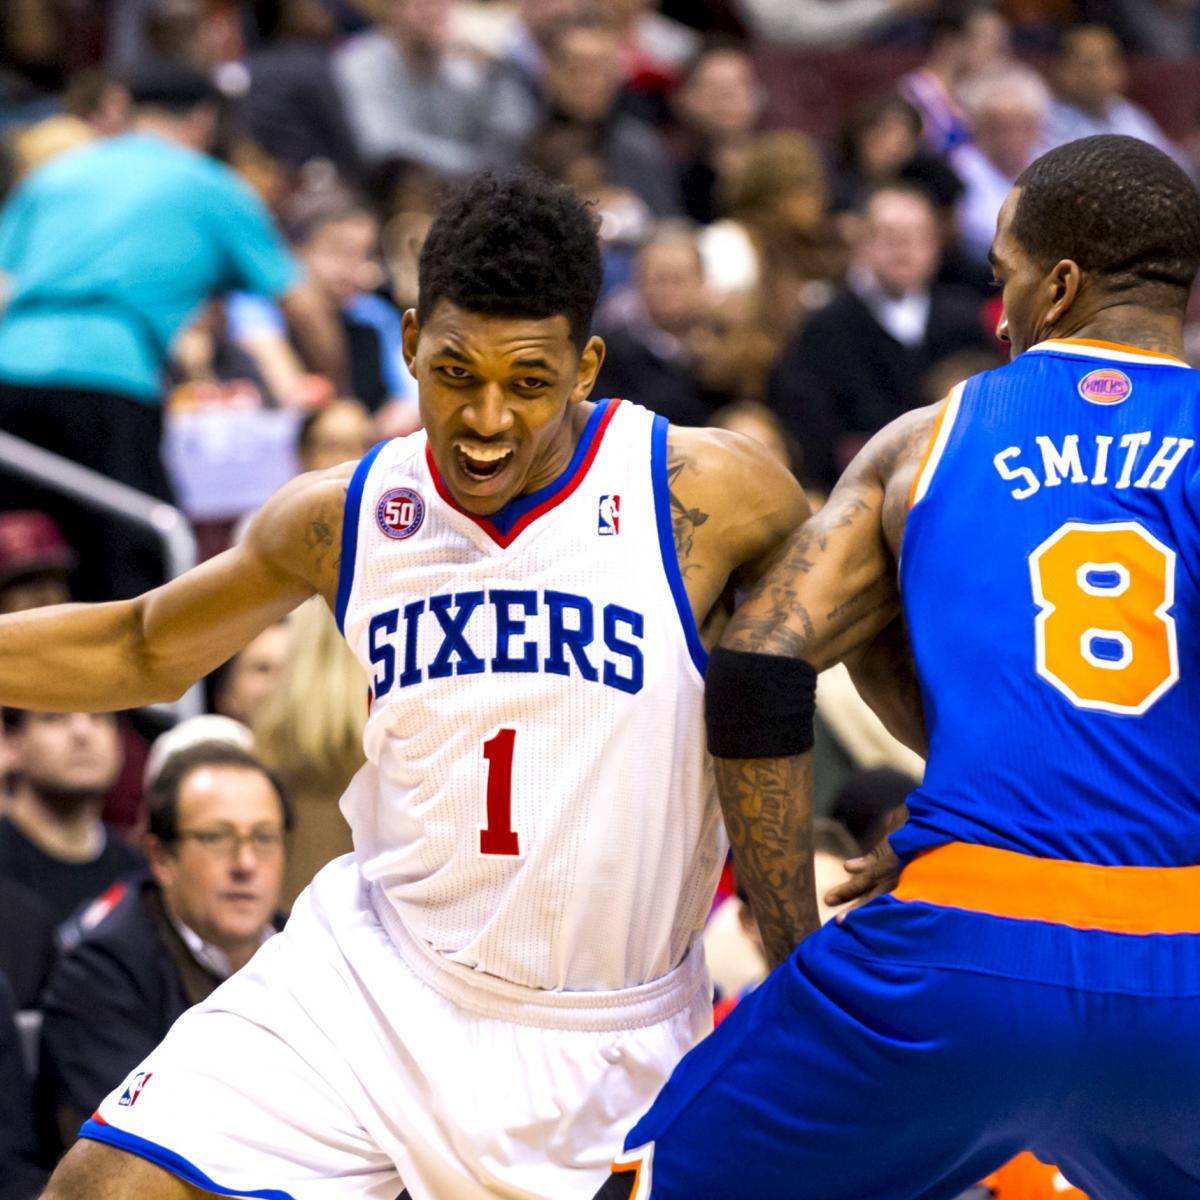 New York Knicks vs. Philadelphia 76ers Live Score, Results and Game